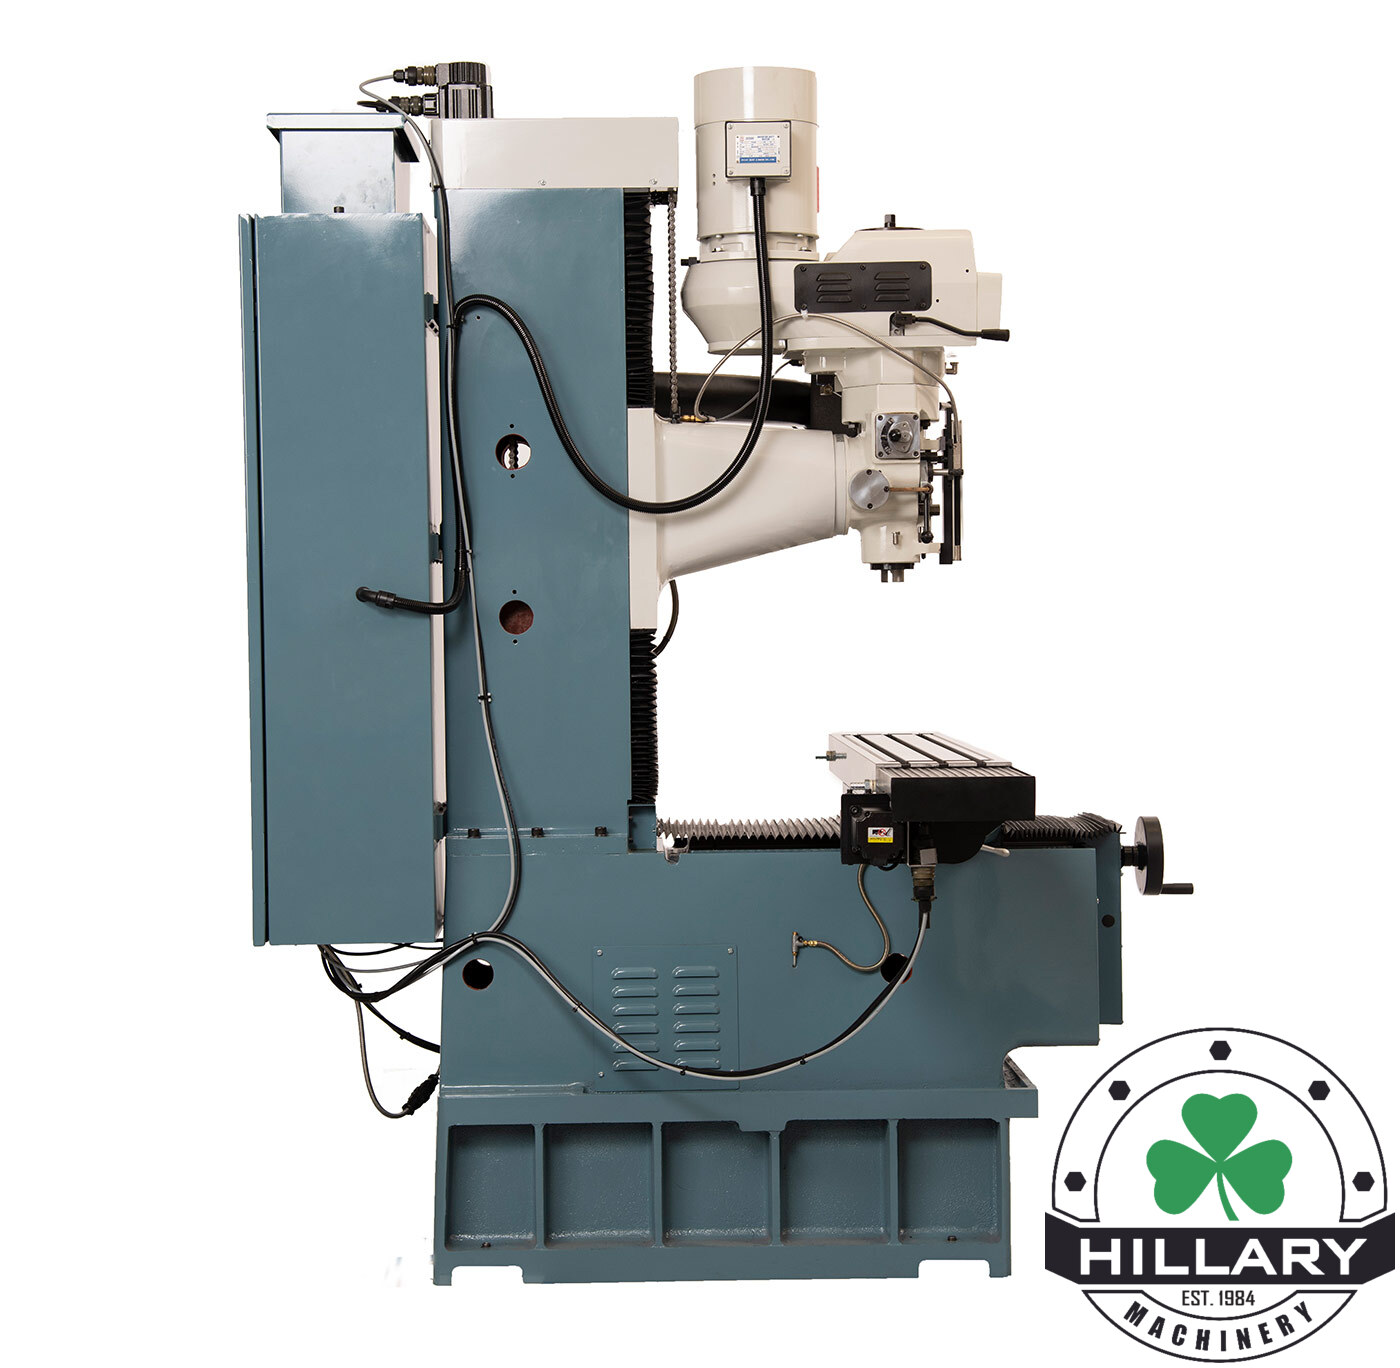 SOUTHWESTERN INDUSTRIES TRAK DPM RX2 Tool Room Mills | Hillary Machinery